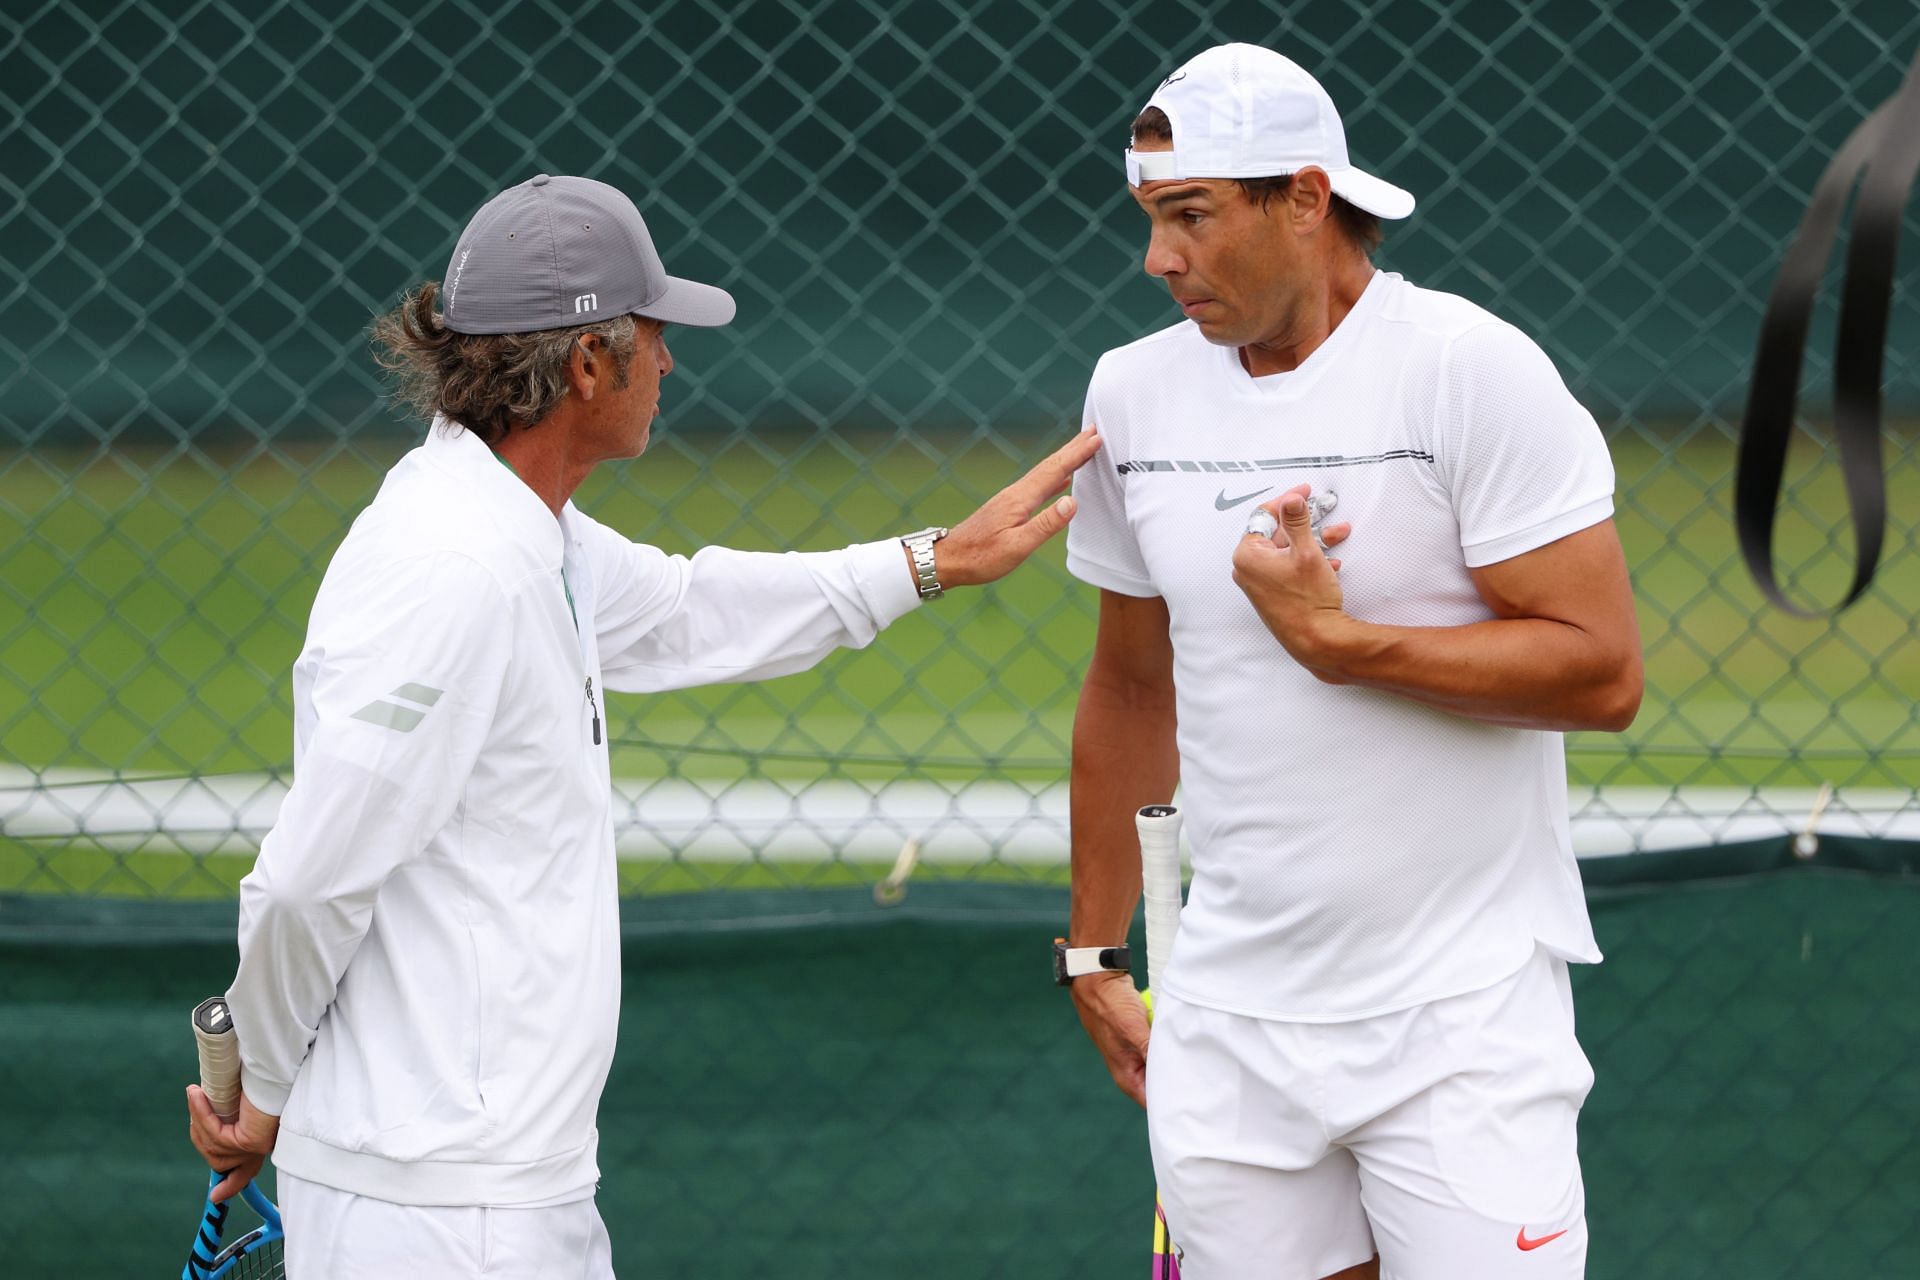 Francisco Roig [left] with Rafael Nadal at Wimbledon 2022